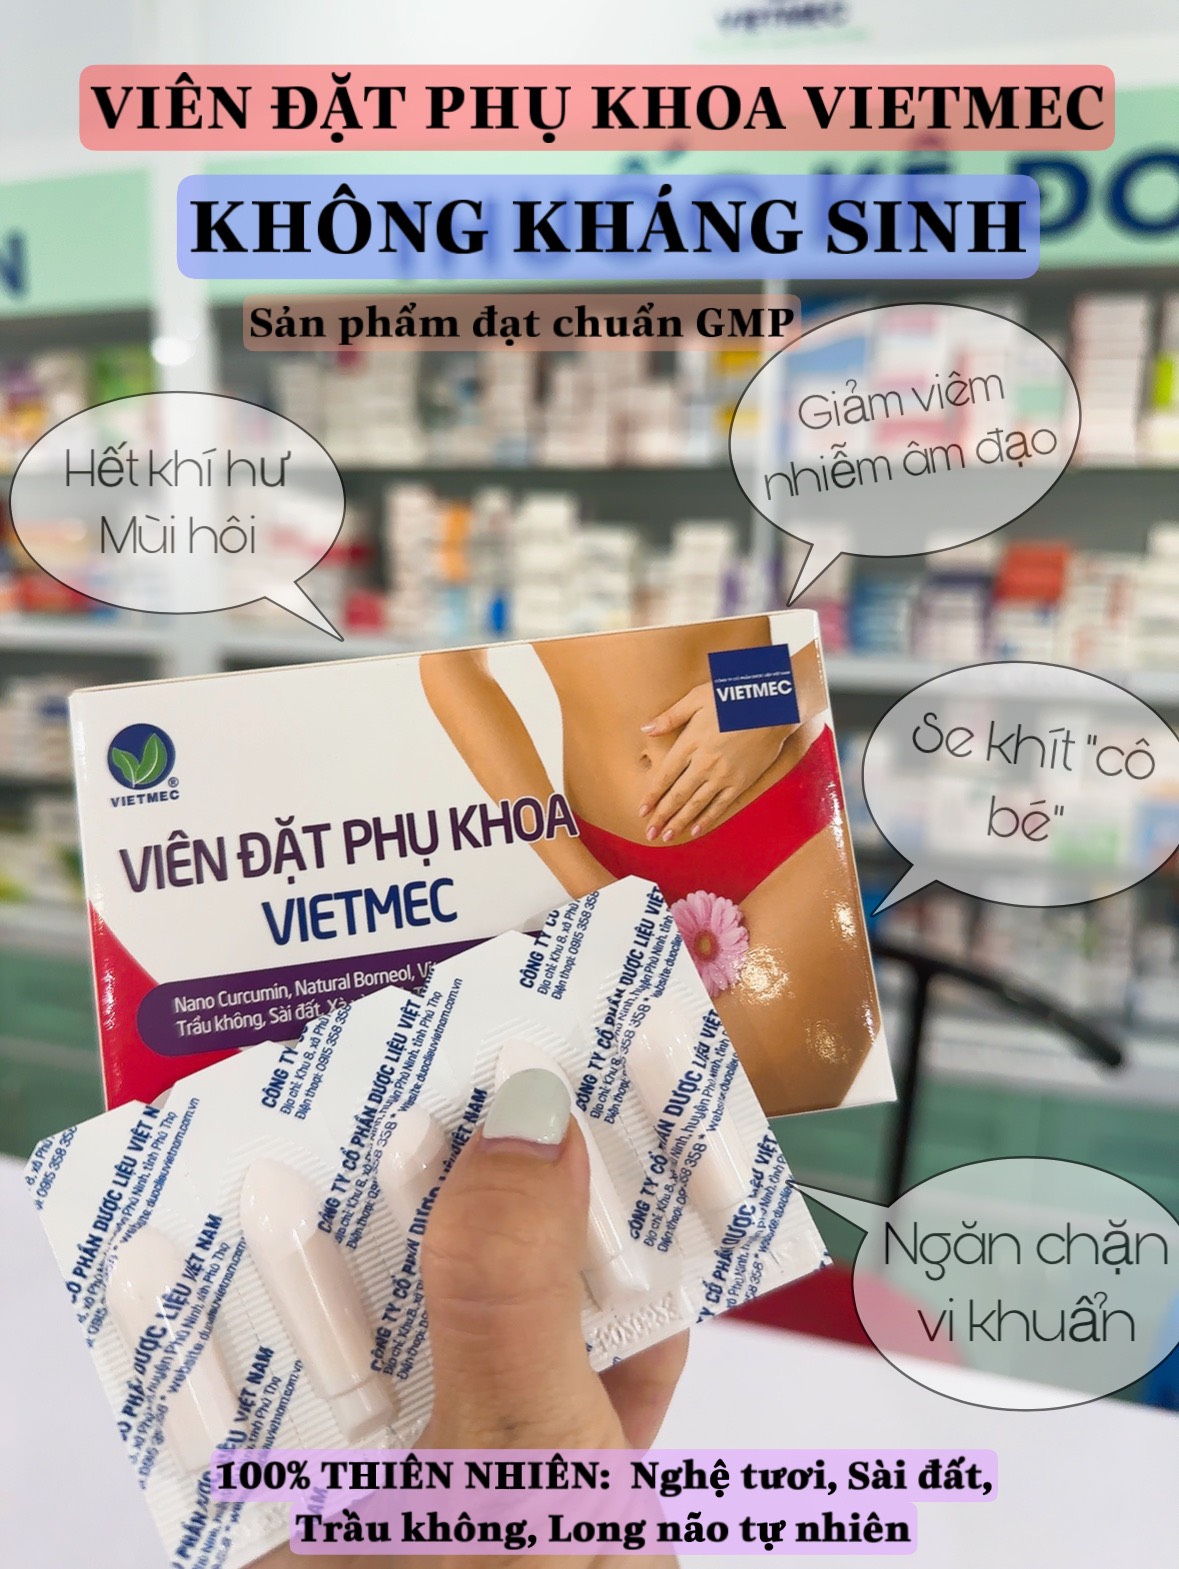 mochanstore.com VietMec Vien dat phu khoa VIETMEC giam khi hu giam ngua cham soc vung kin